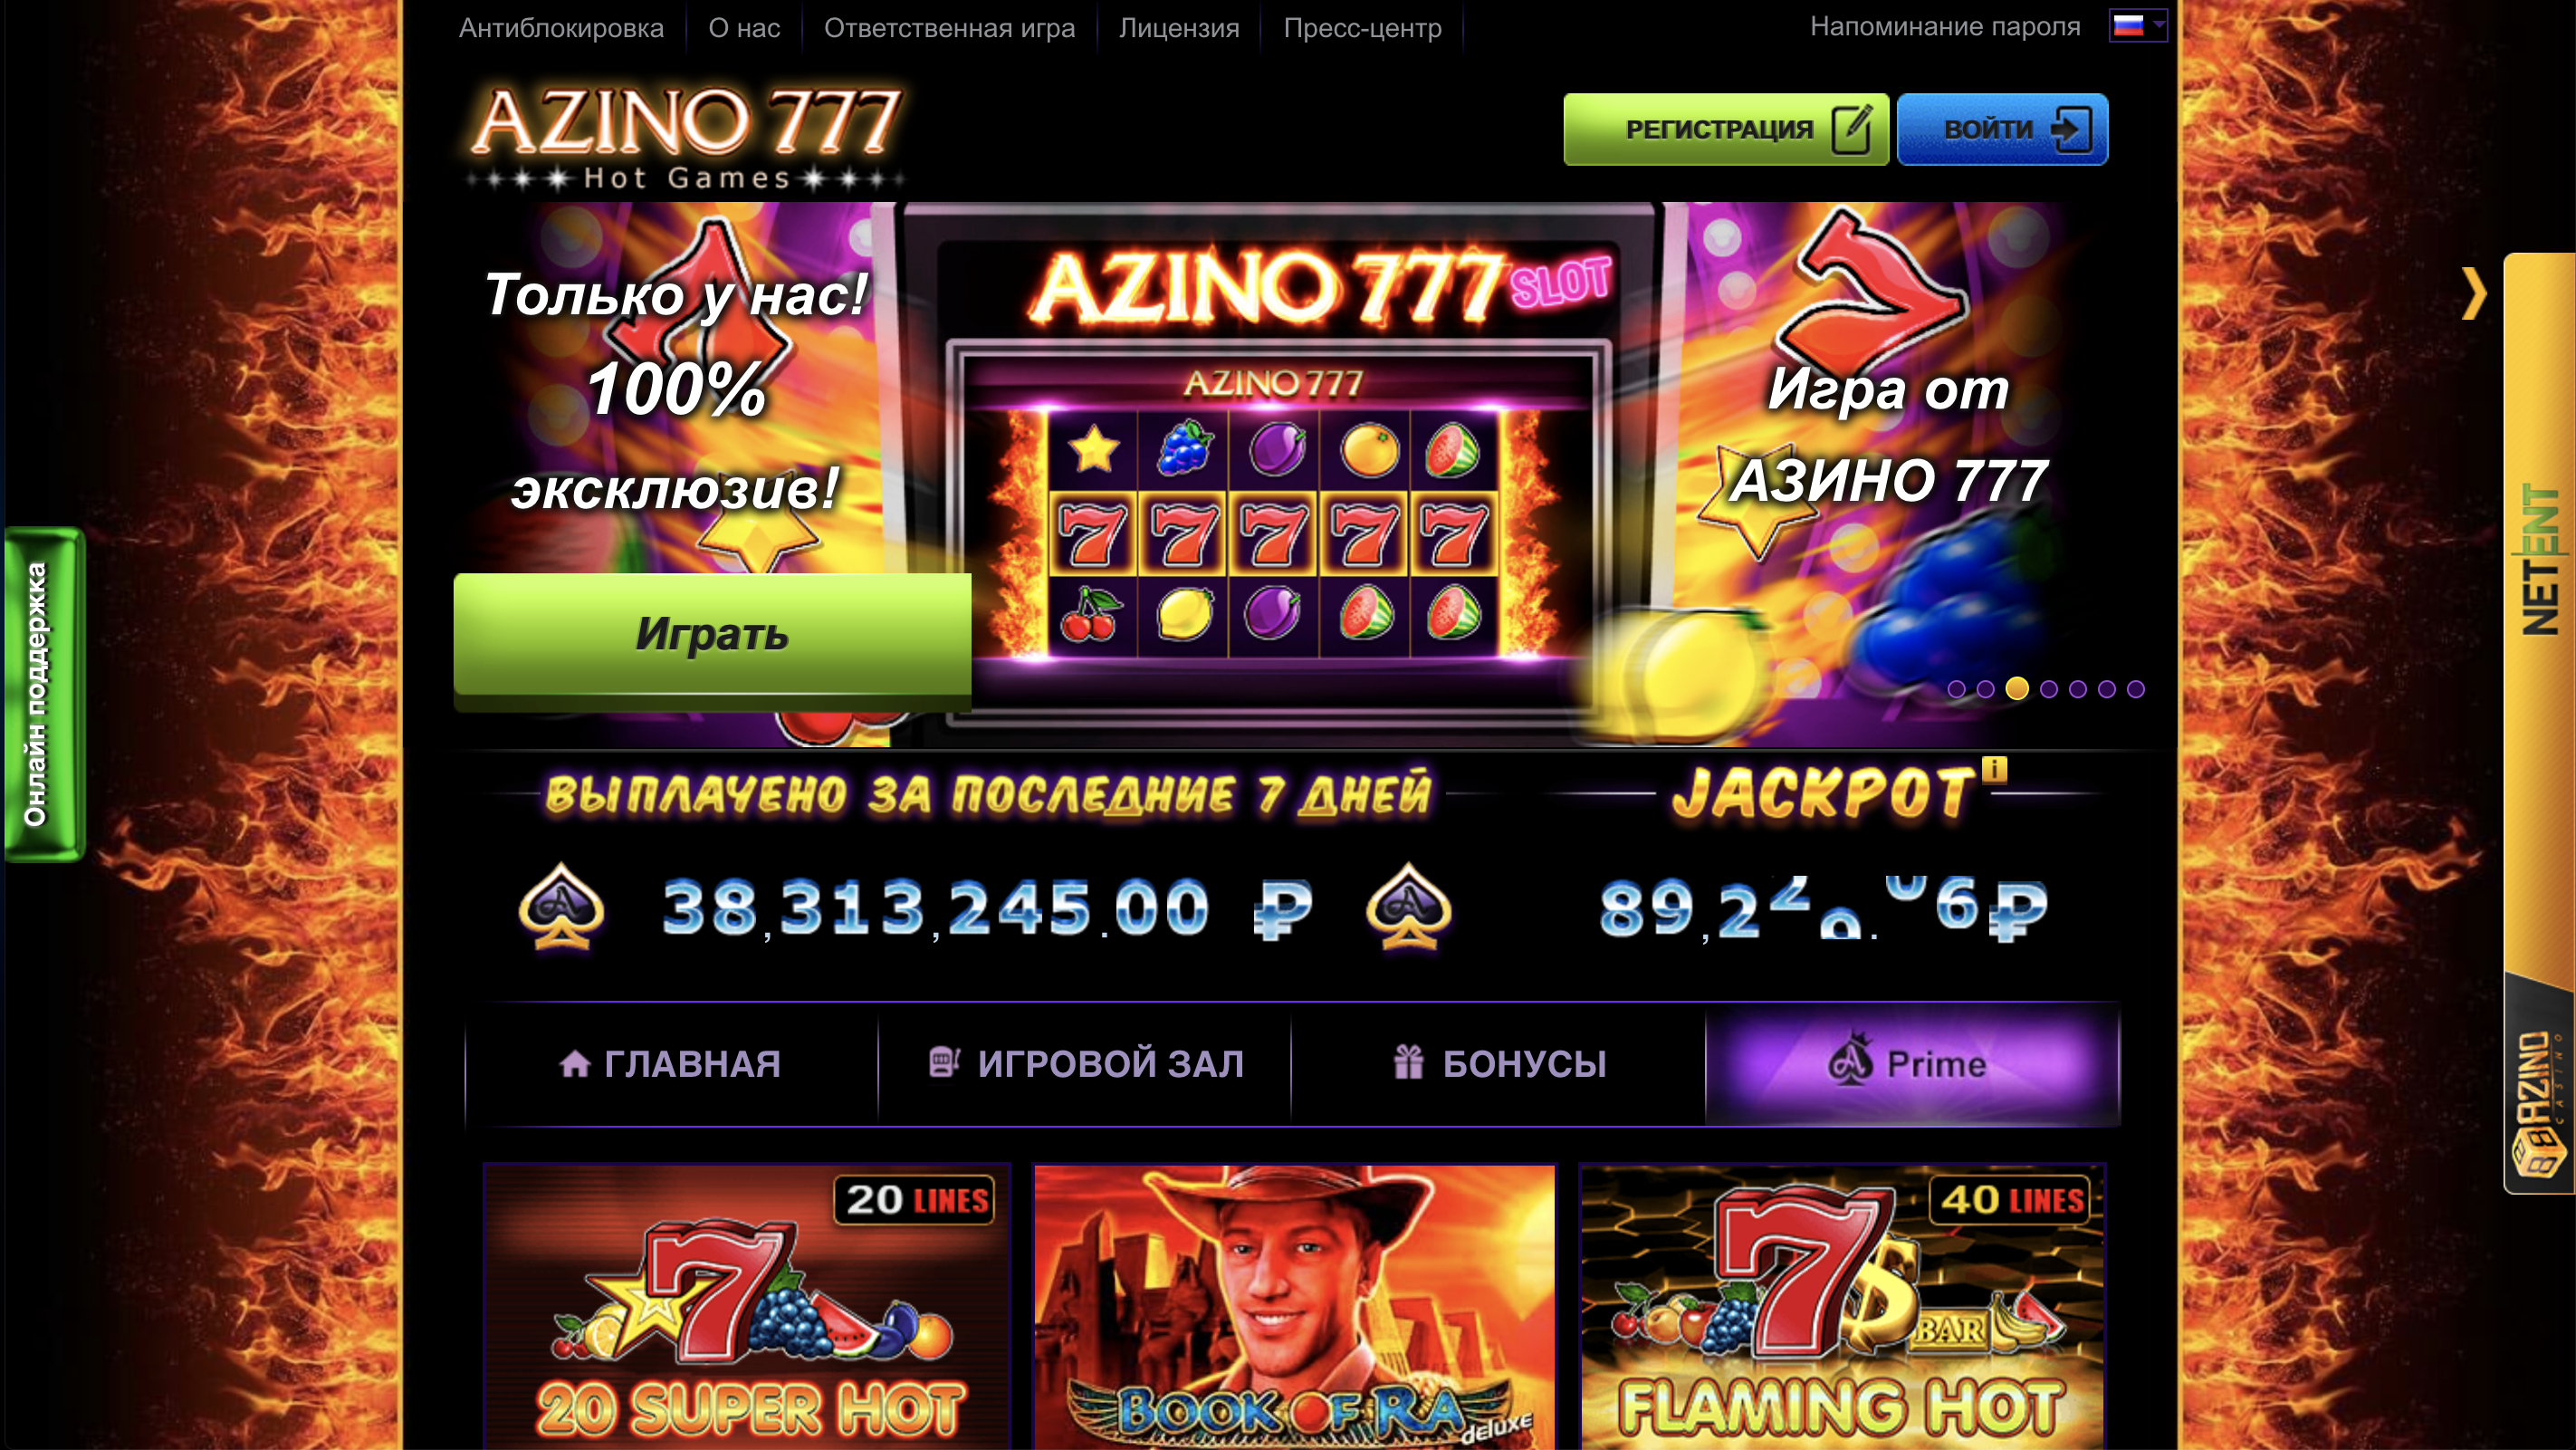 Азино 777 azino777 casino play. Казино азино777 бездепозитный бонус. Азино777 казино зеркало. Казино три топора 777.